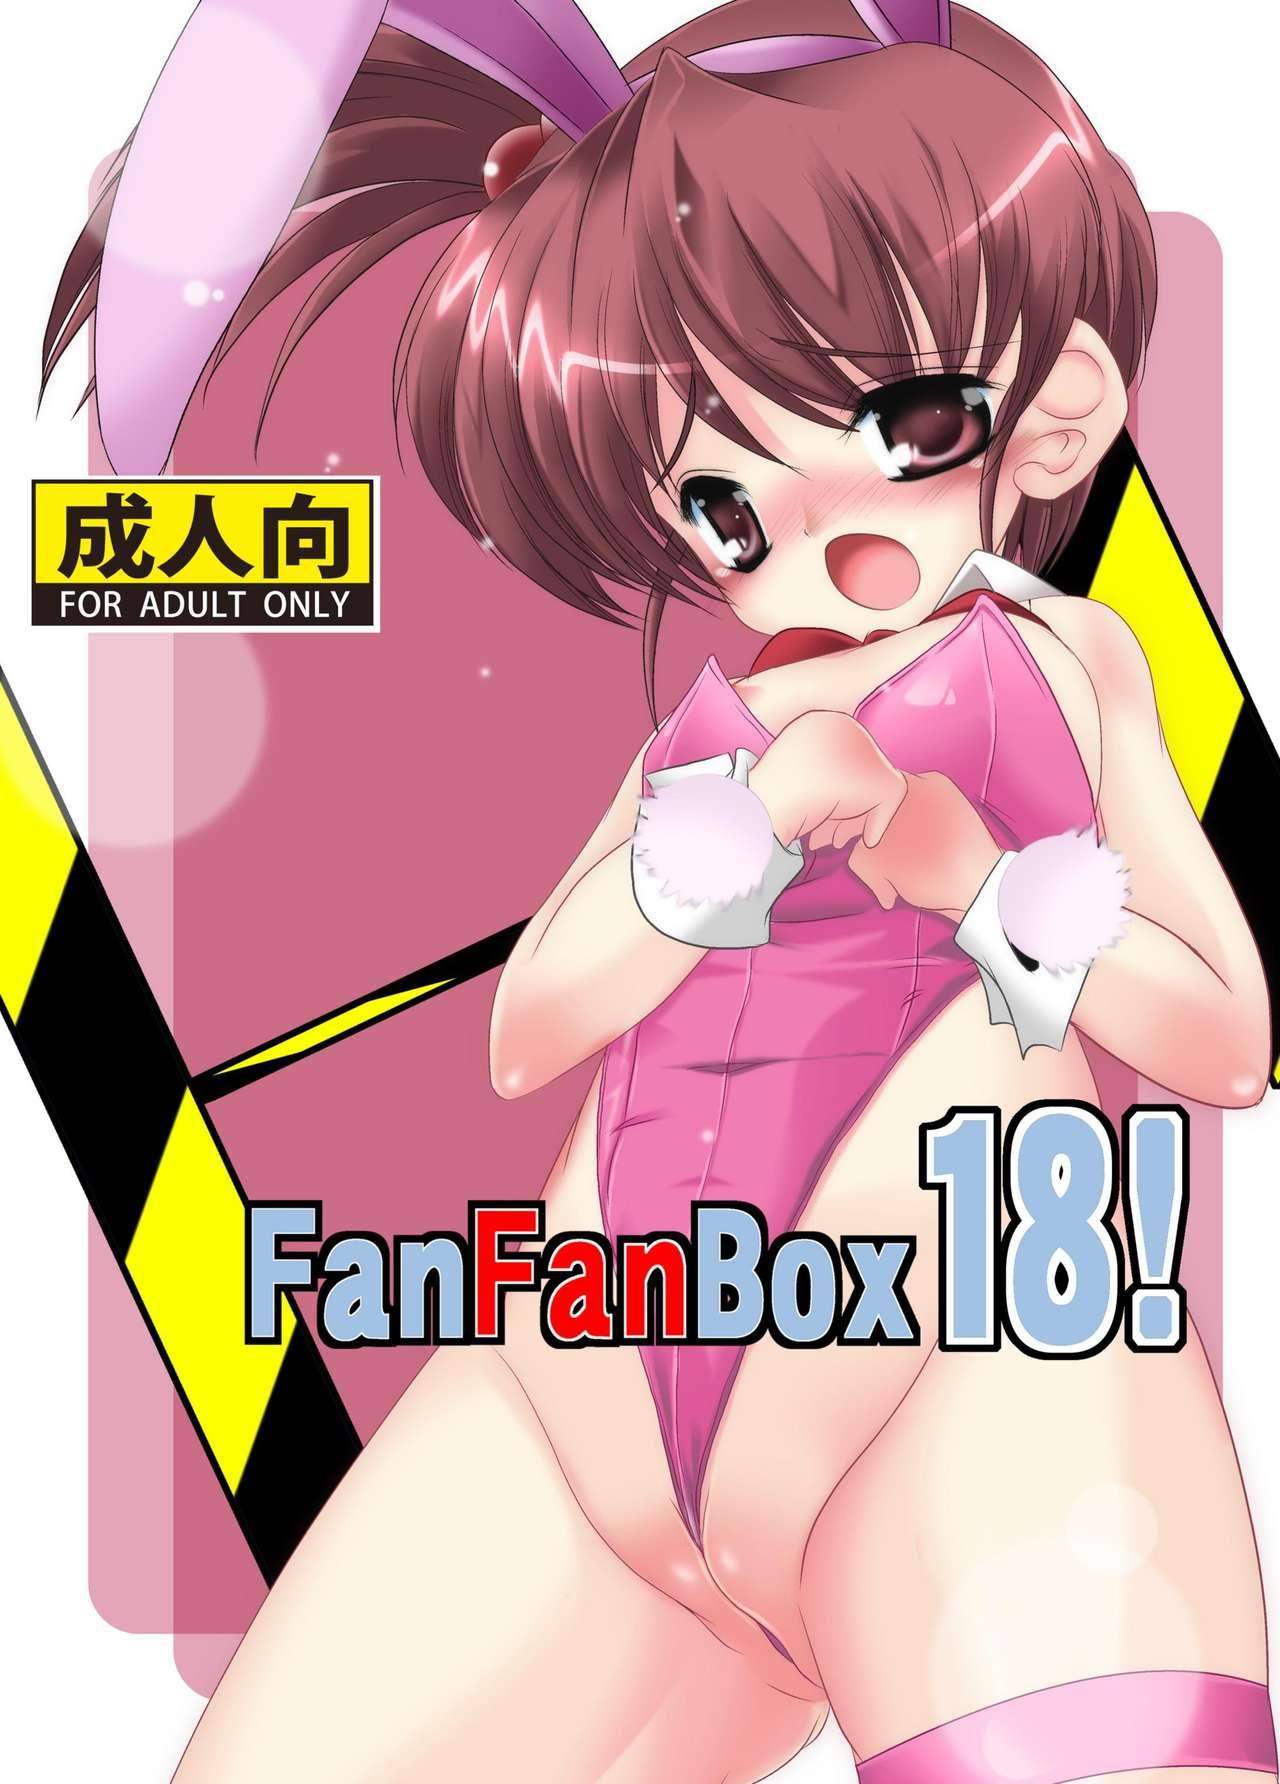 FanFanBox18! 0